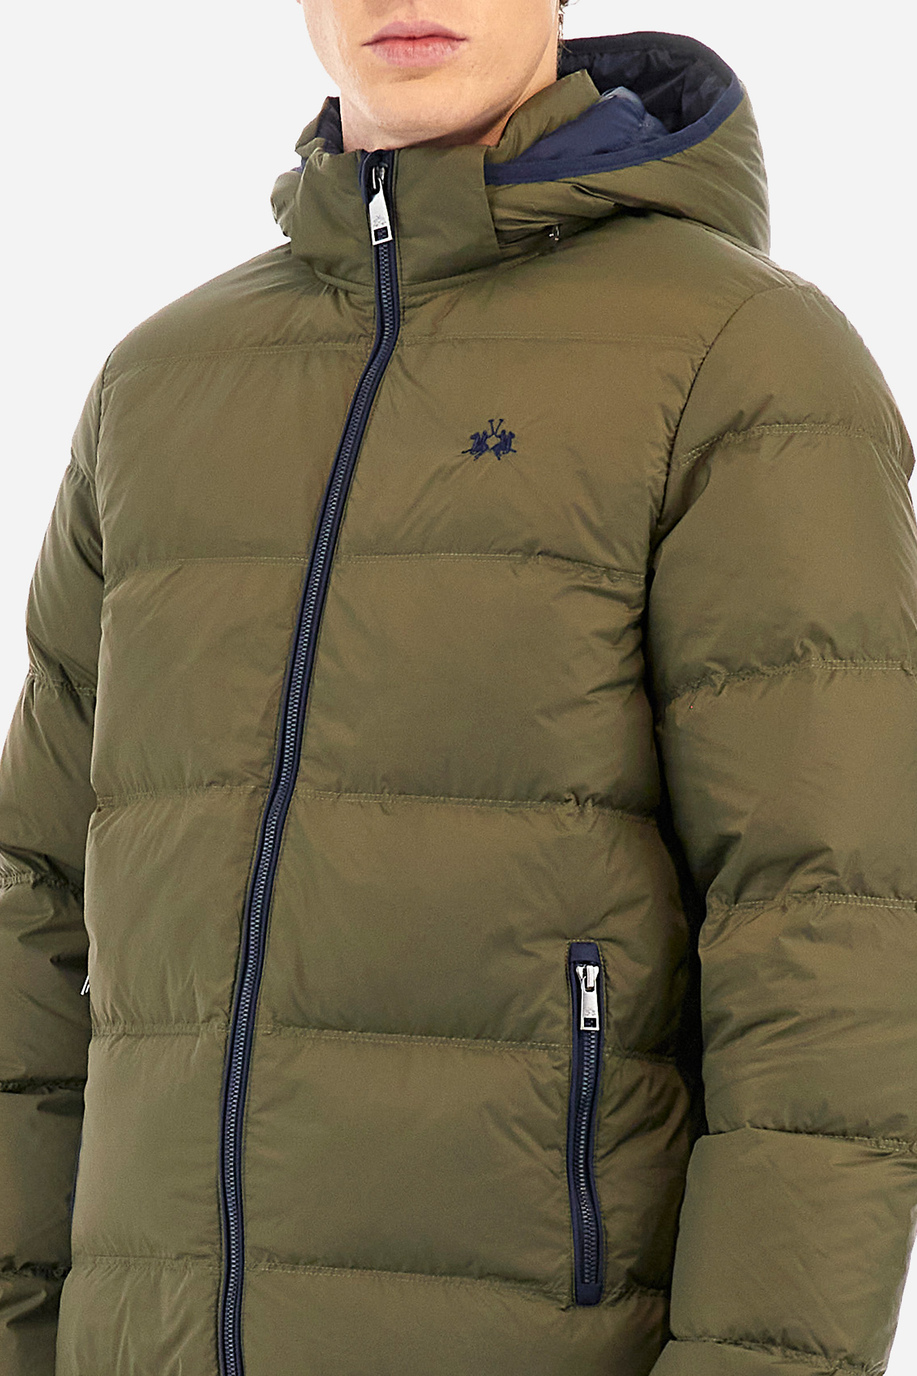 Bomber jacket man regular fit - Wladyslav - Outerwear | La Martina - Official Online Shop